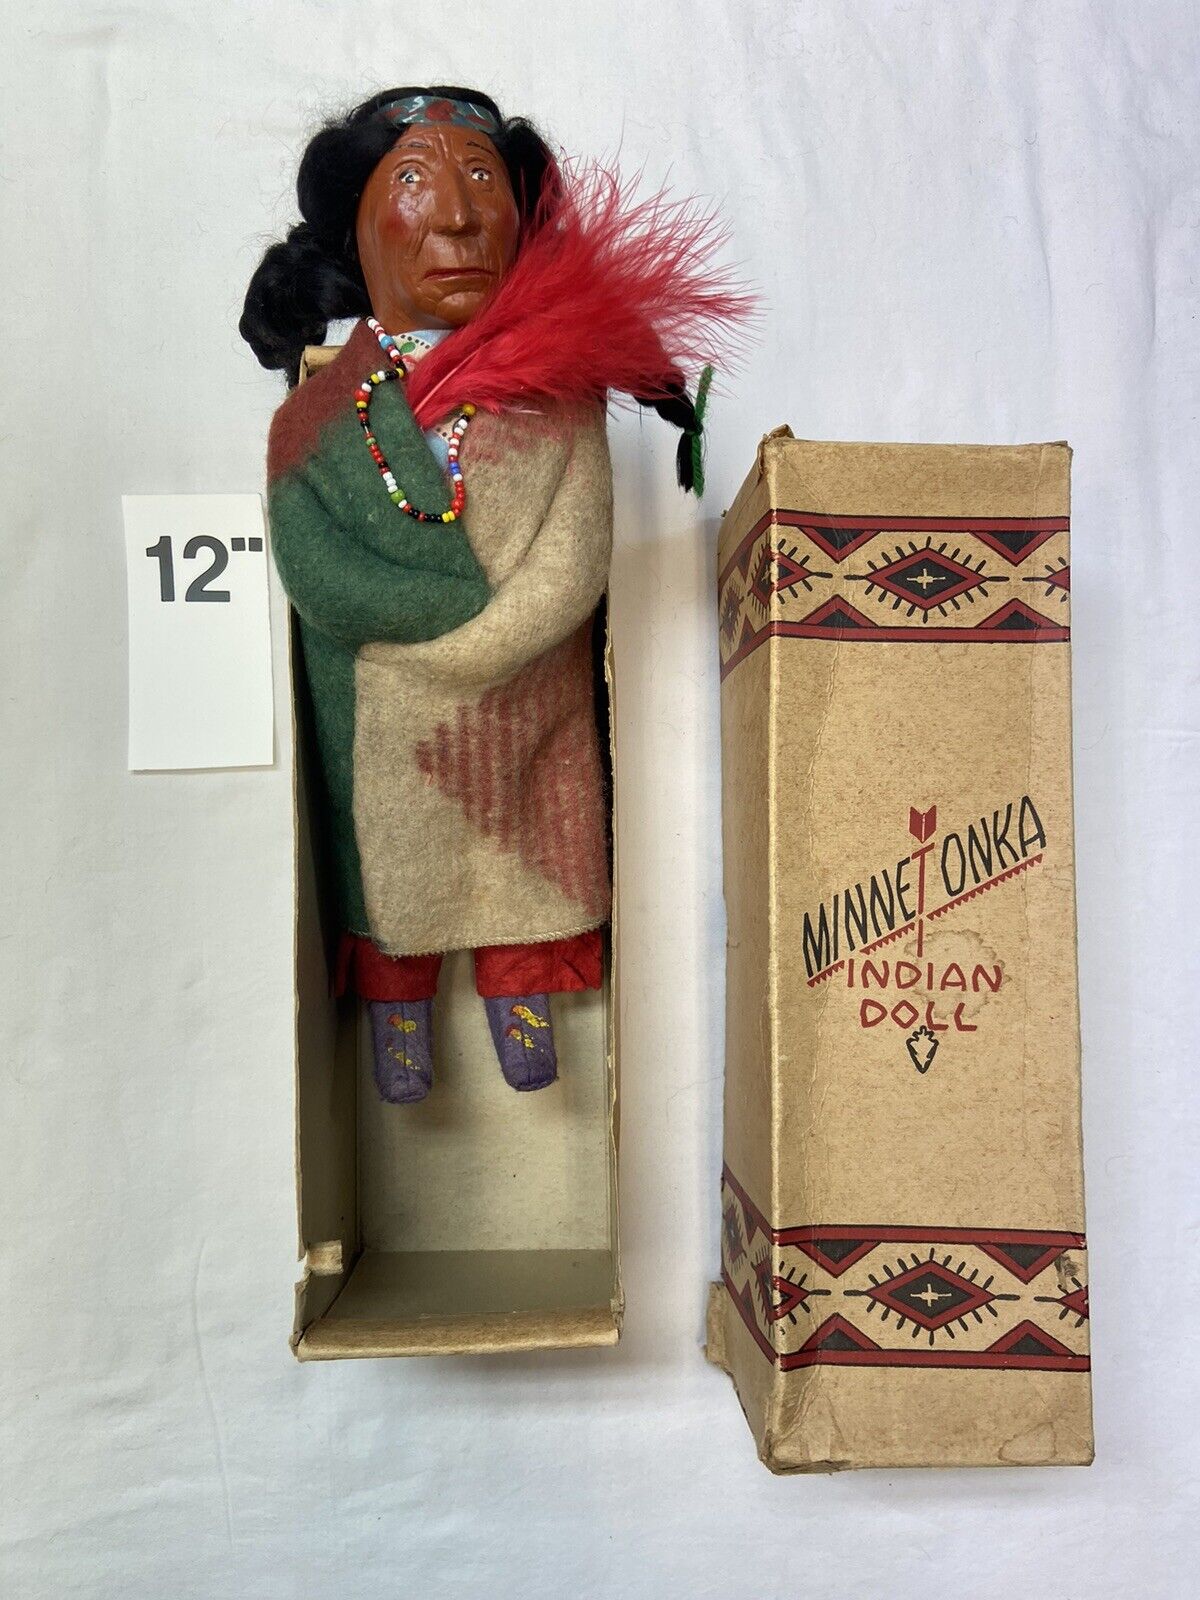 Skookum Doll, Chief In Original box great condition, 12” High $95